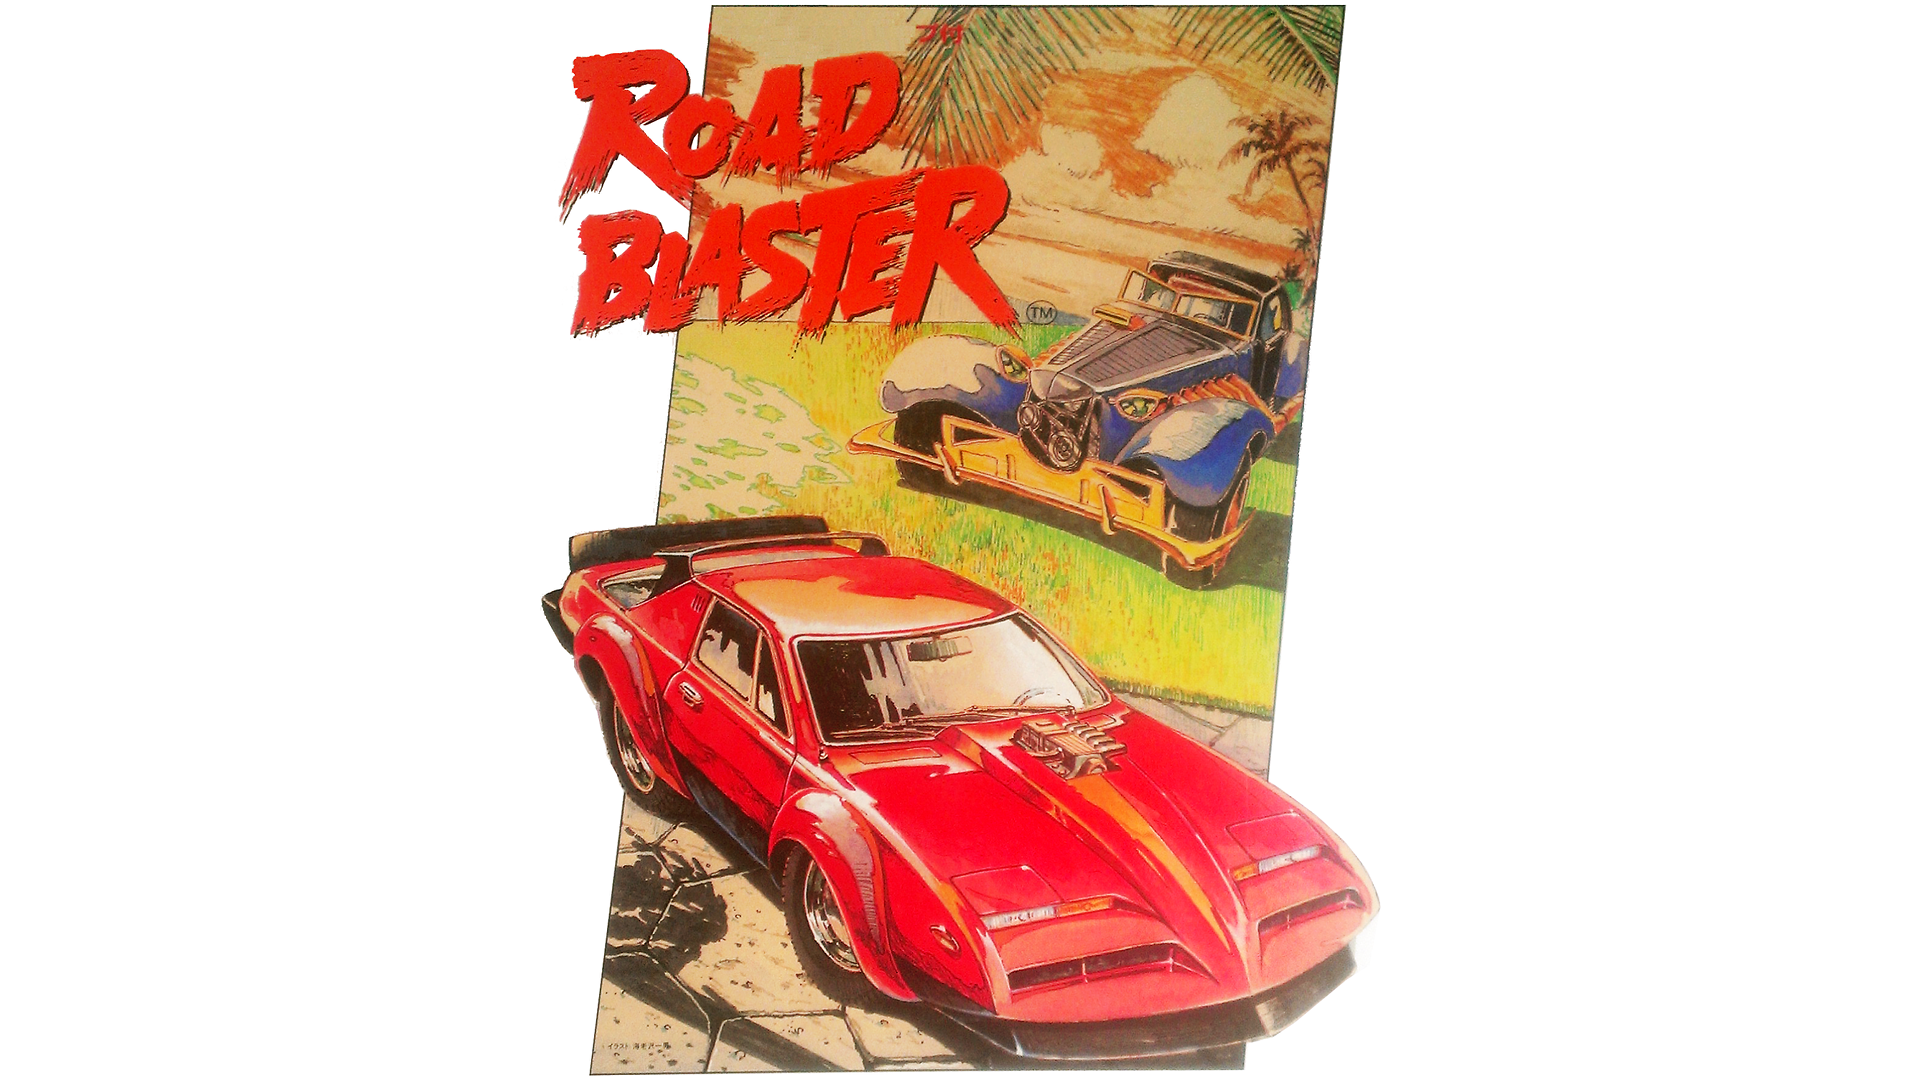 Super Road Blaster